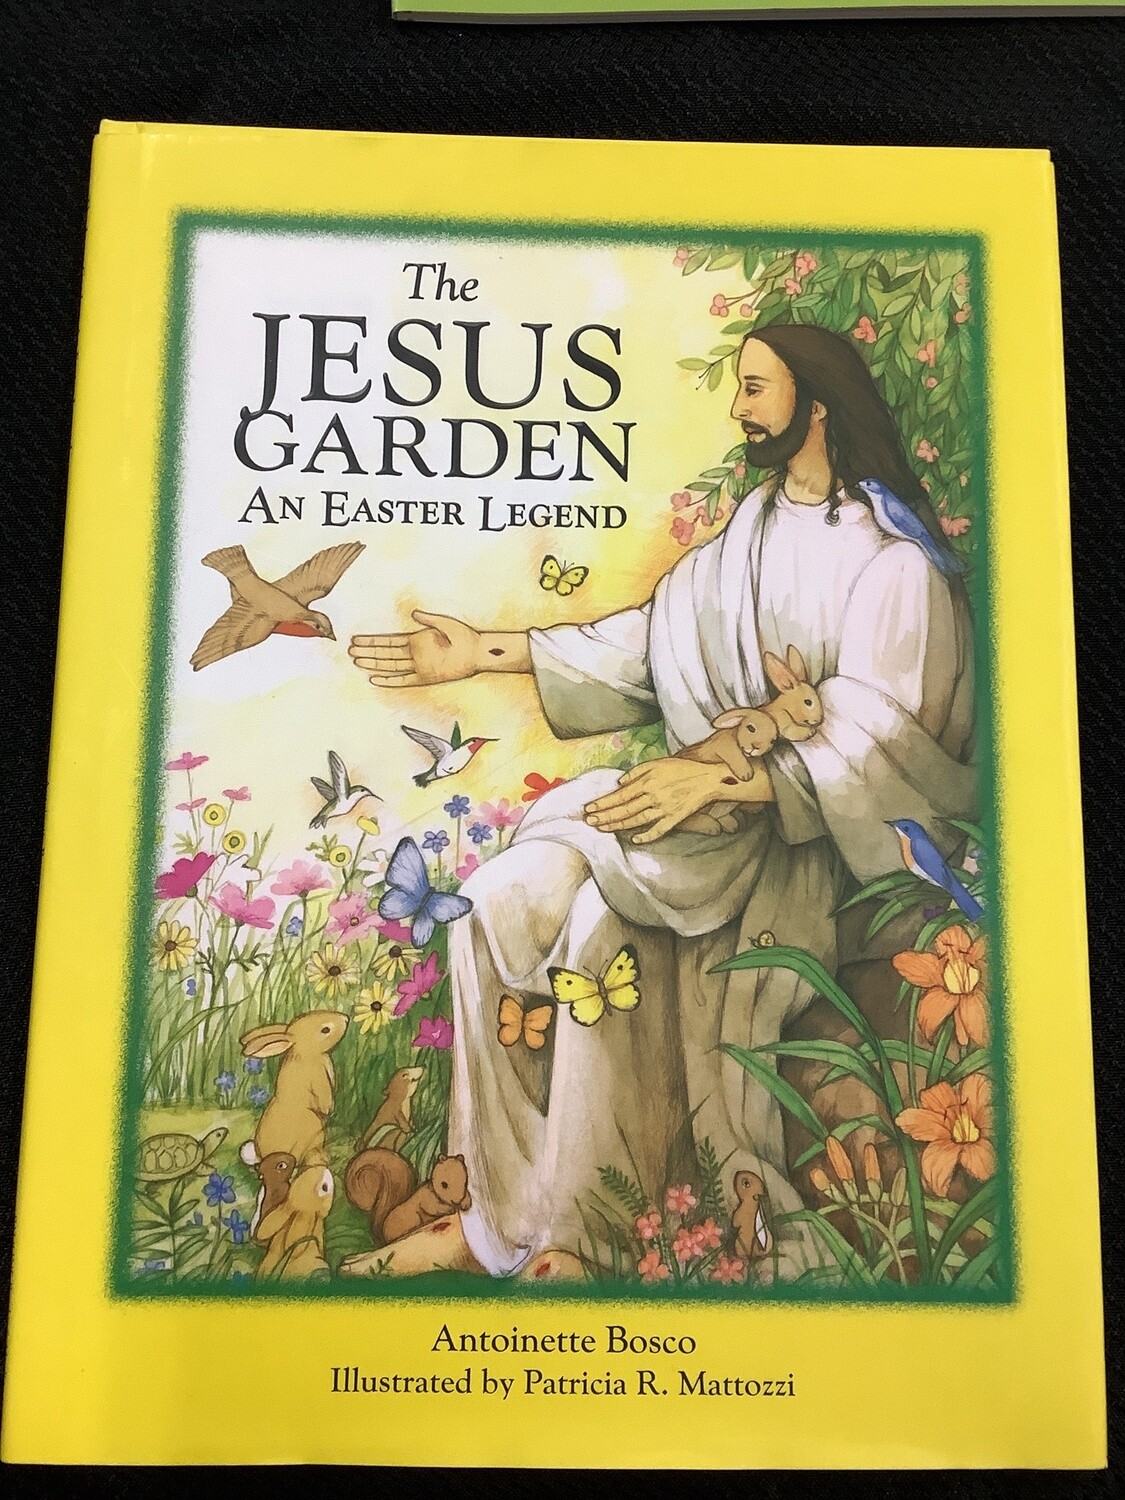 The Jesus Garden an Easter Legend - Antoinette Bosco, Patricia R. Mattozzi